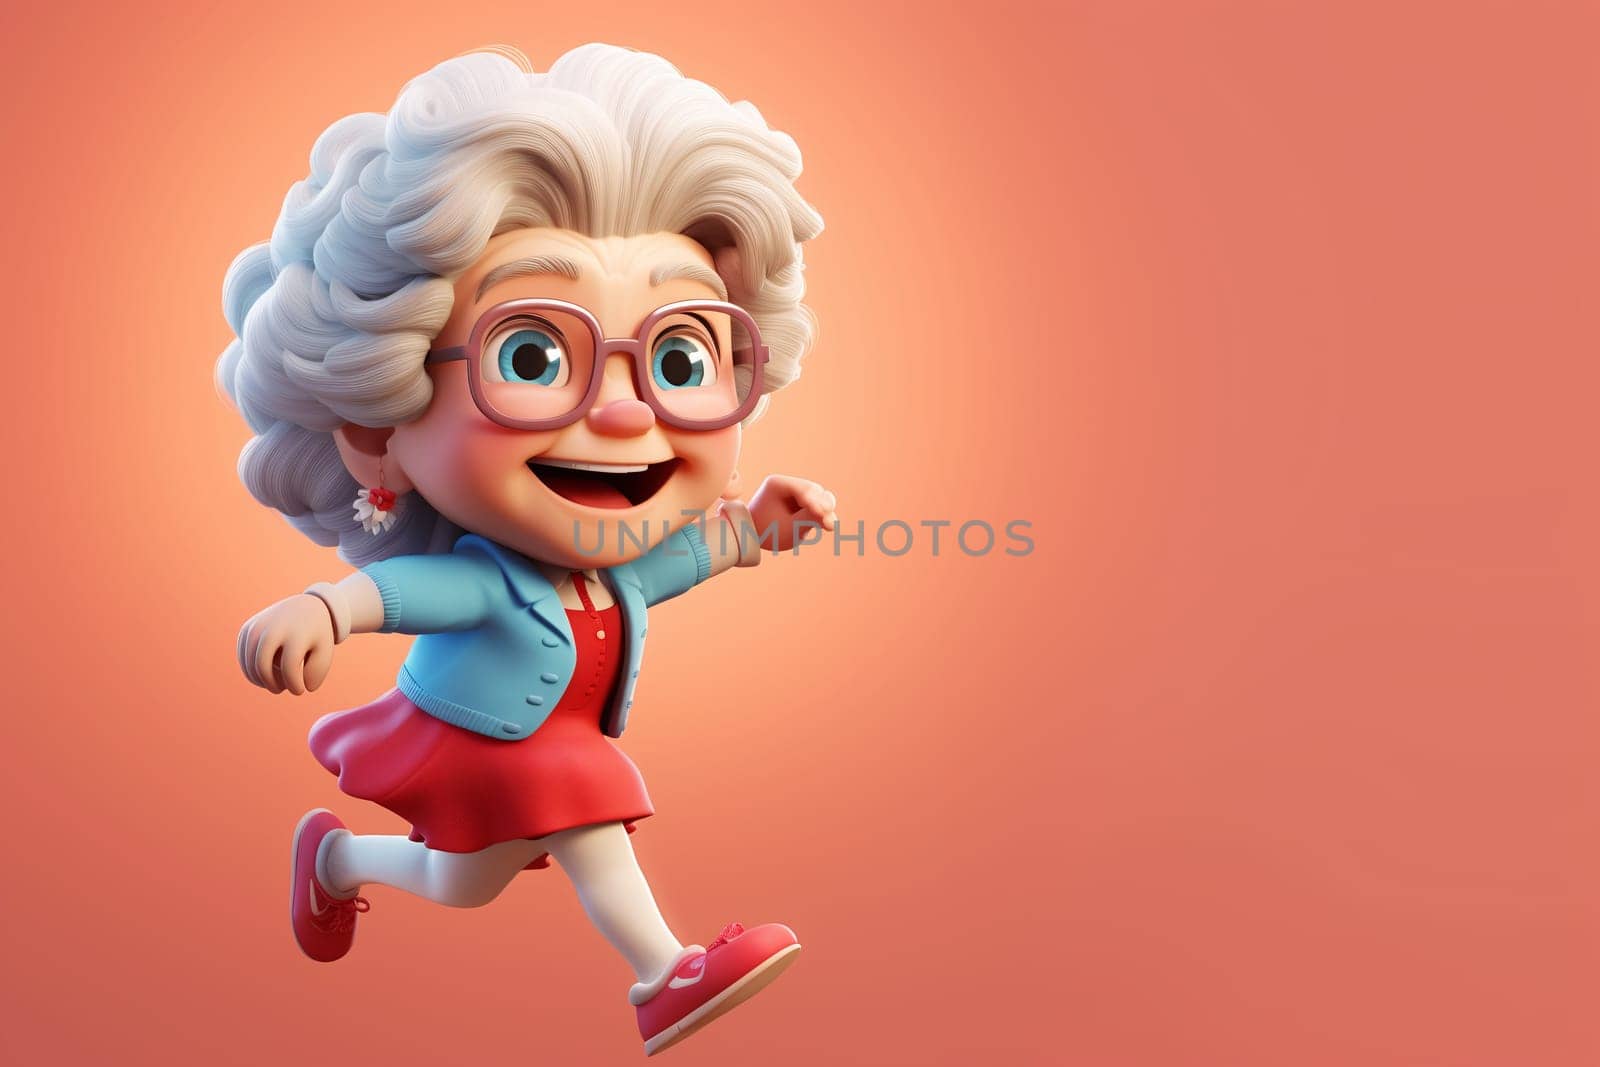 Cheerful Elderly Animated Character Sprinting Joyfully by chrisroll